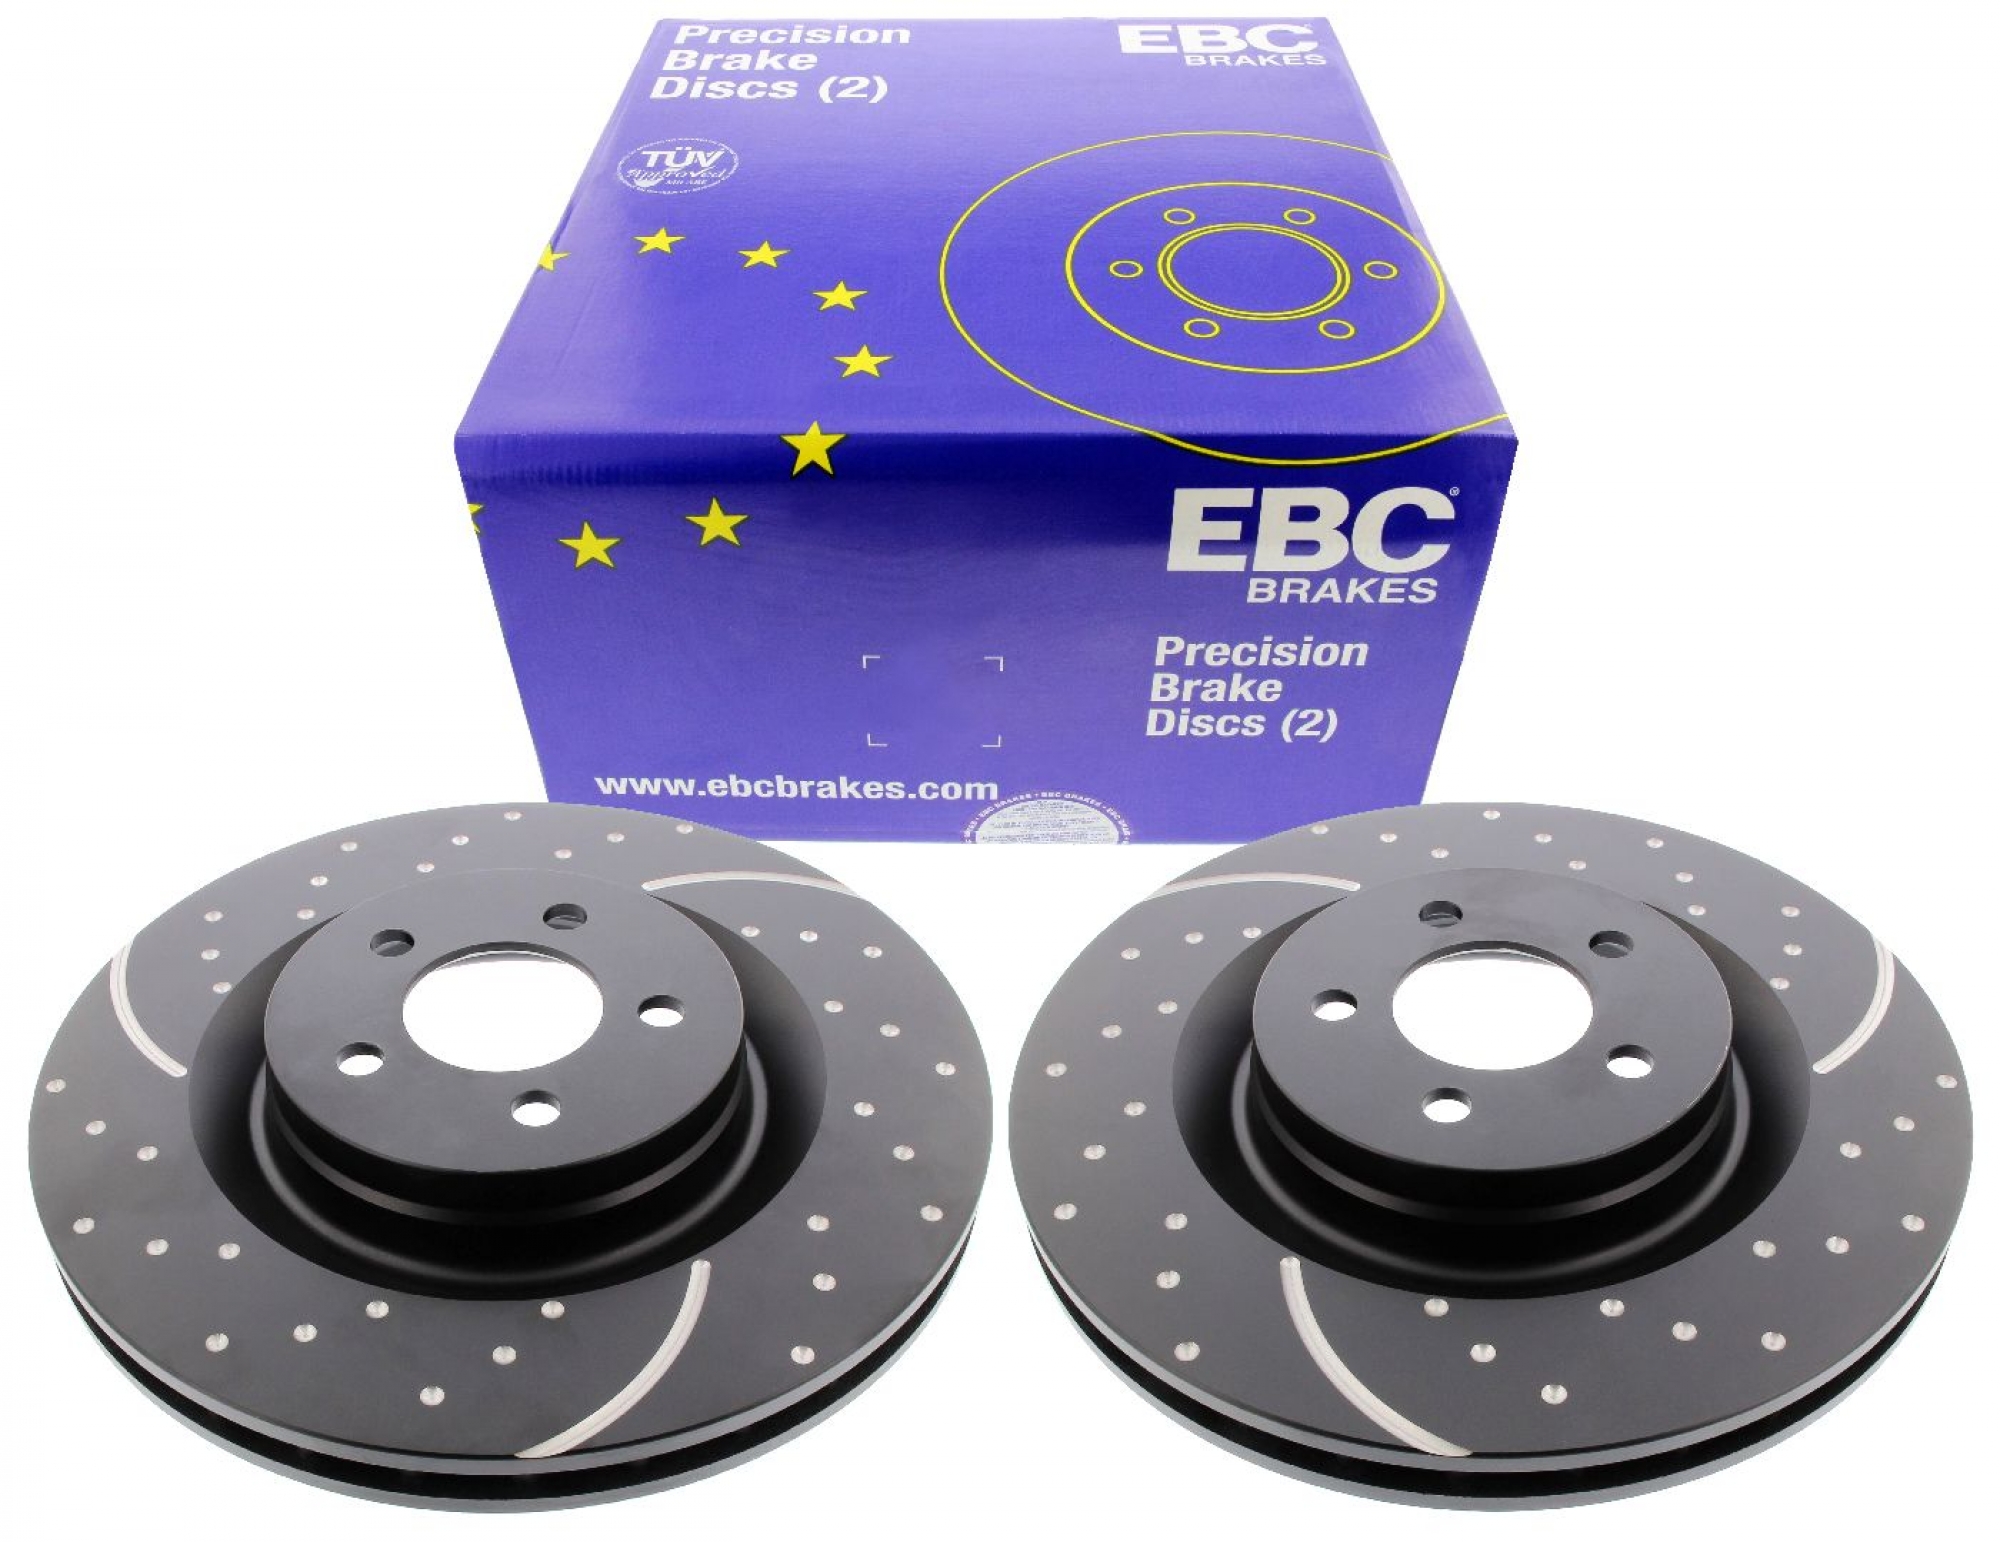 EBC-Bremsscheiben, Turbo Groove Disc Black (2-teilig), VA fü...